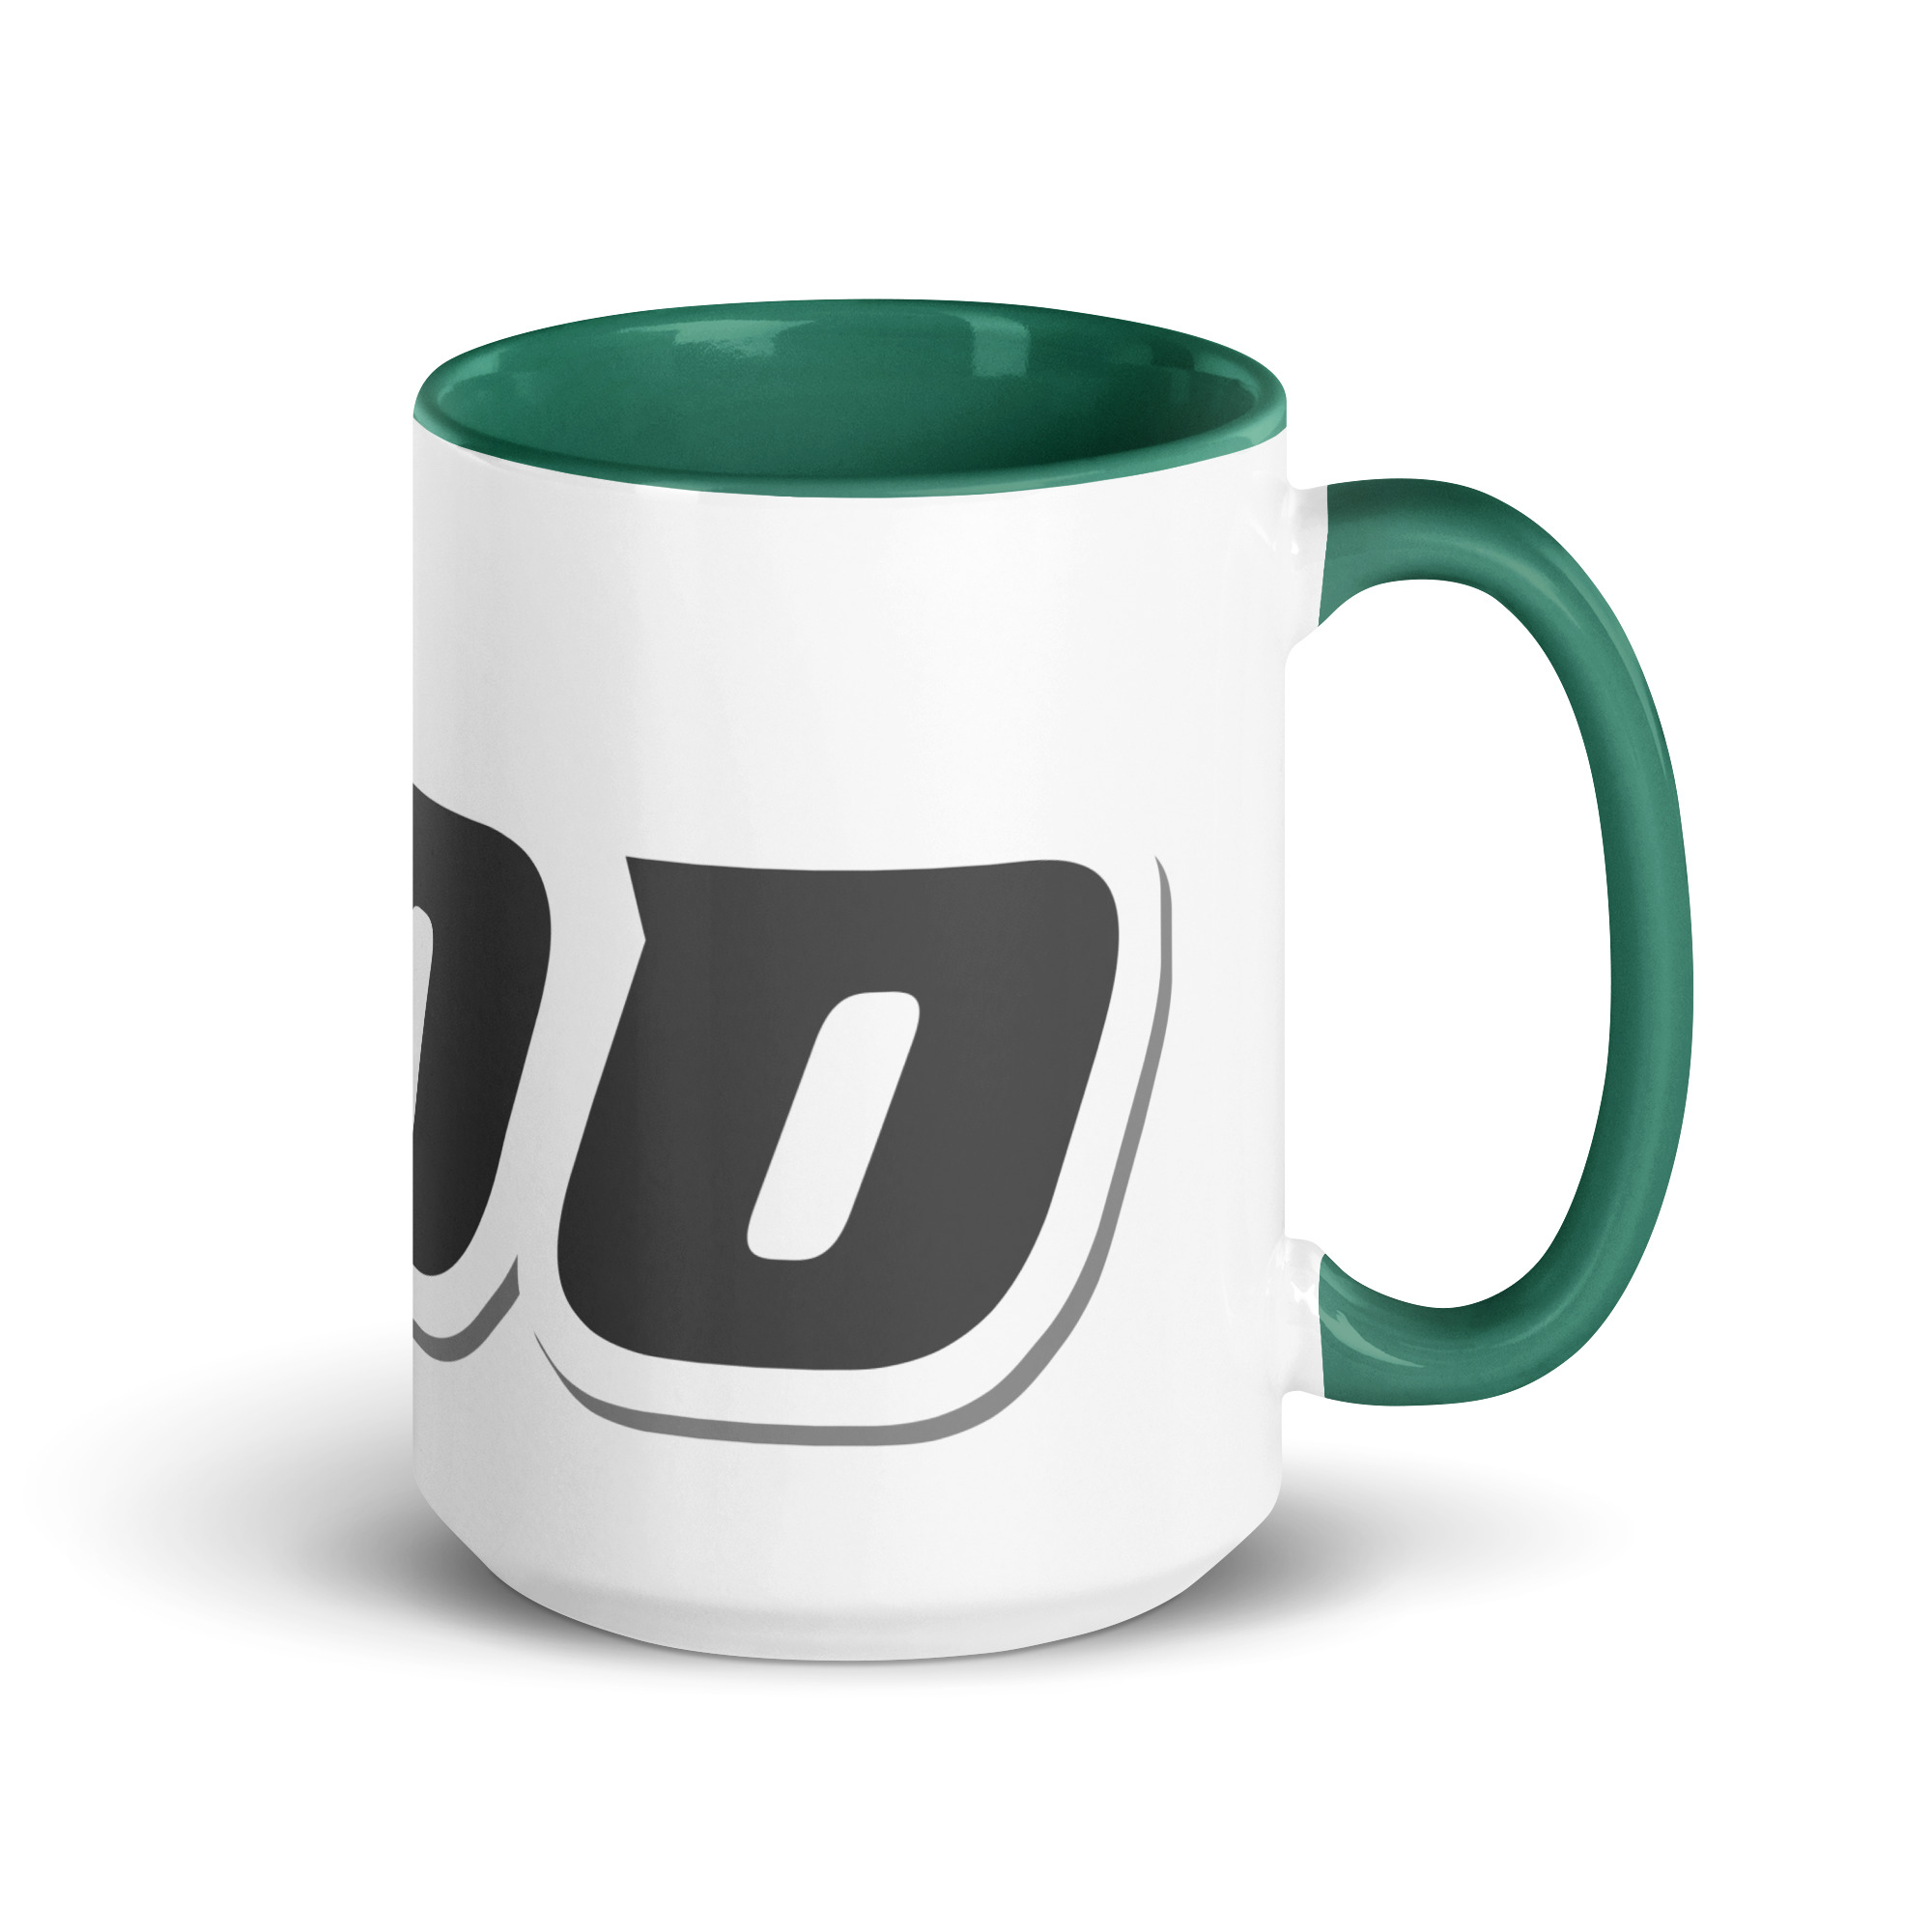 white-ceramic-mug-with-color-inside-dark-green-15-oz-right-6525b6484c523.jpg